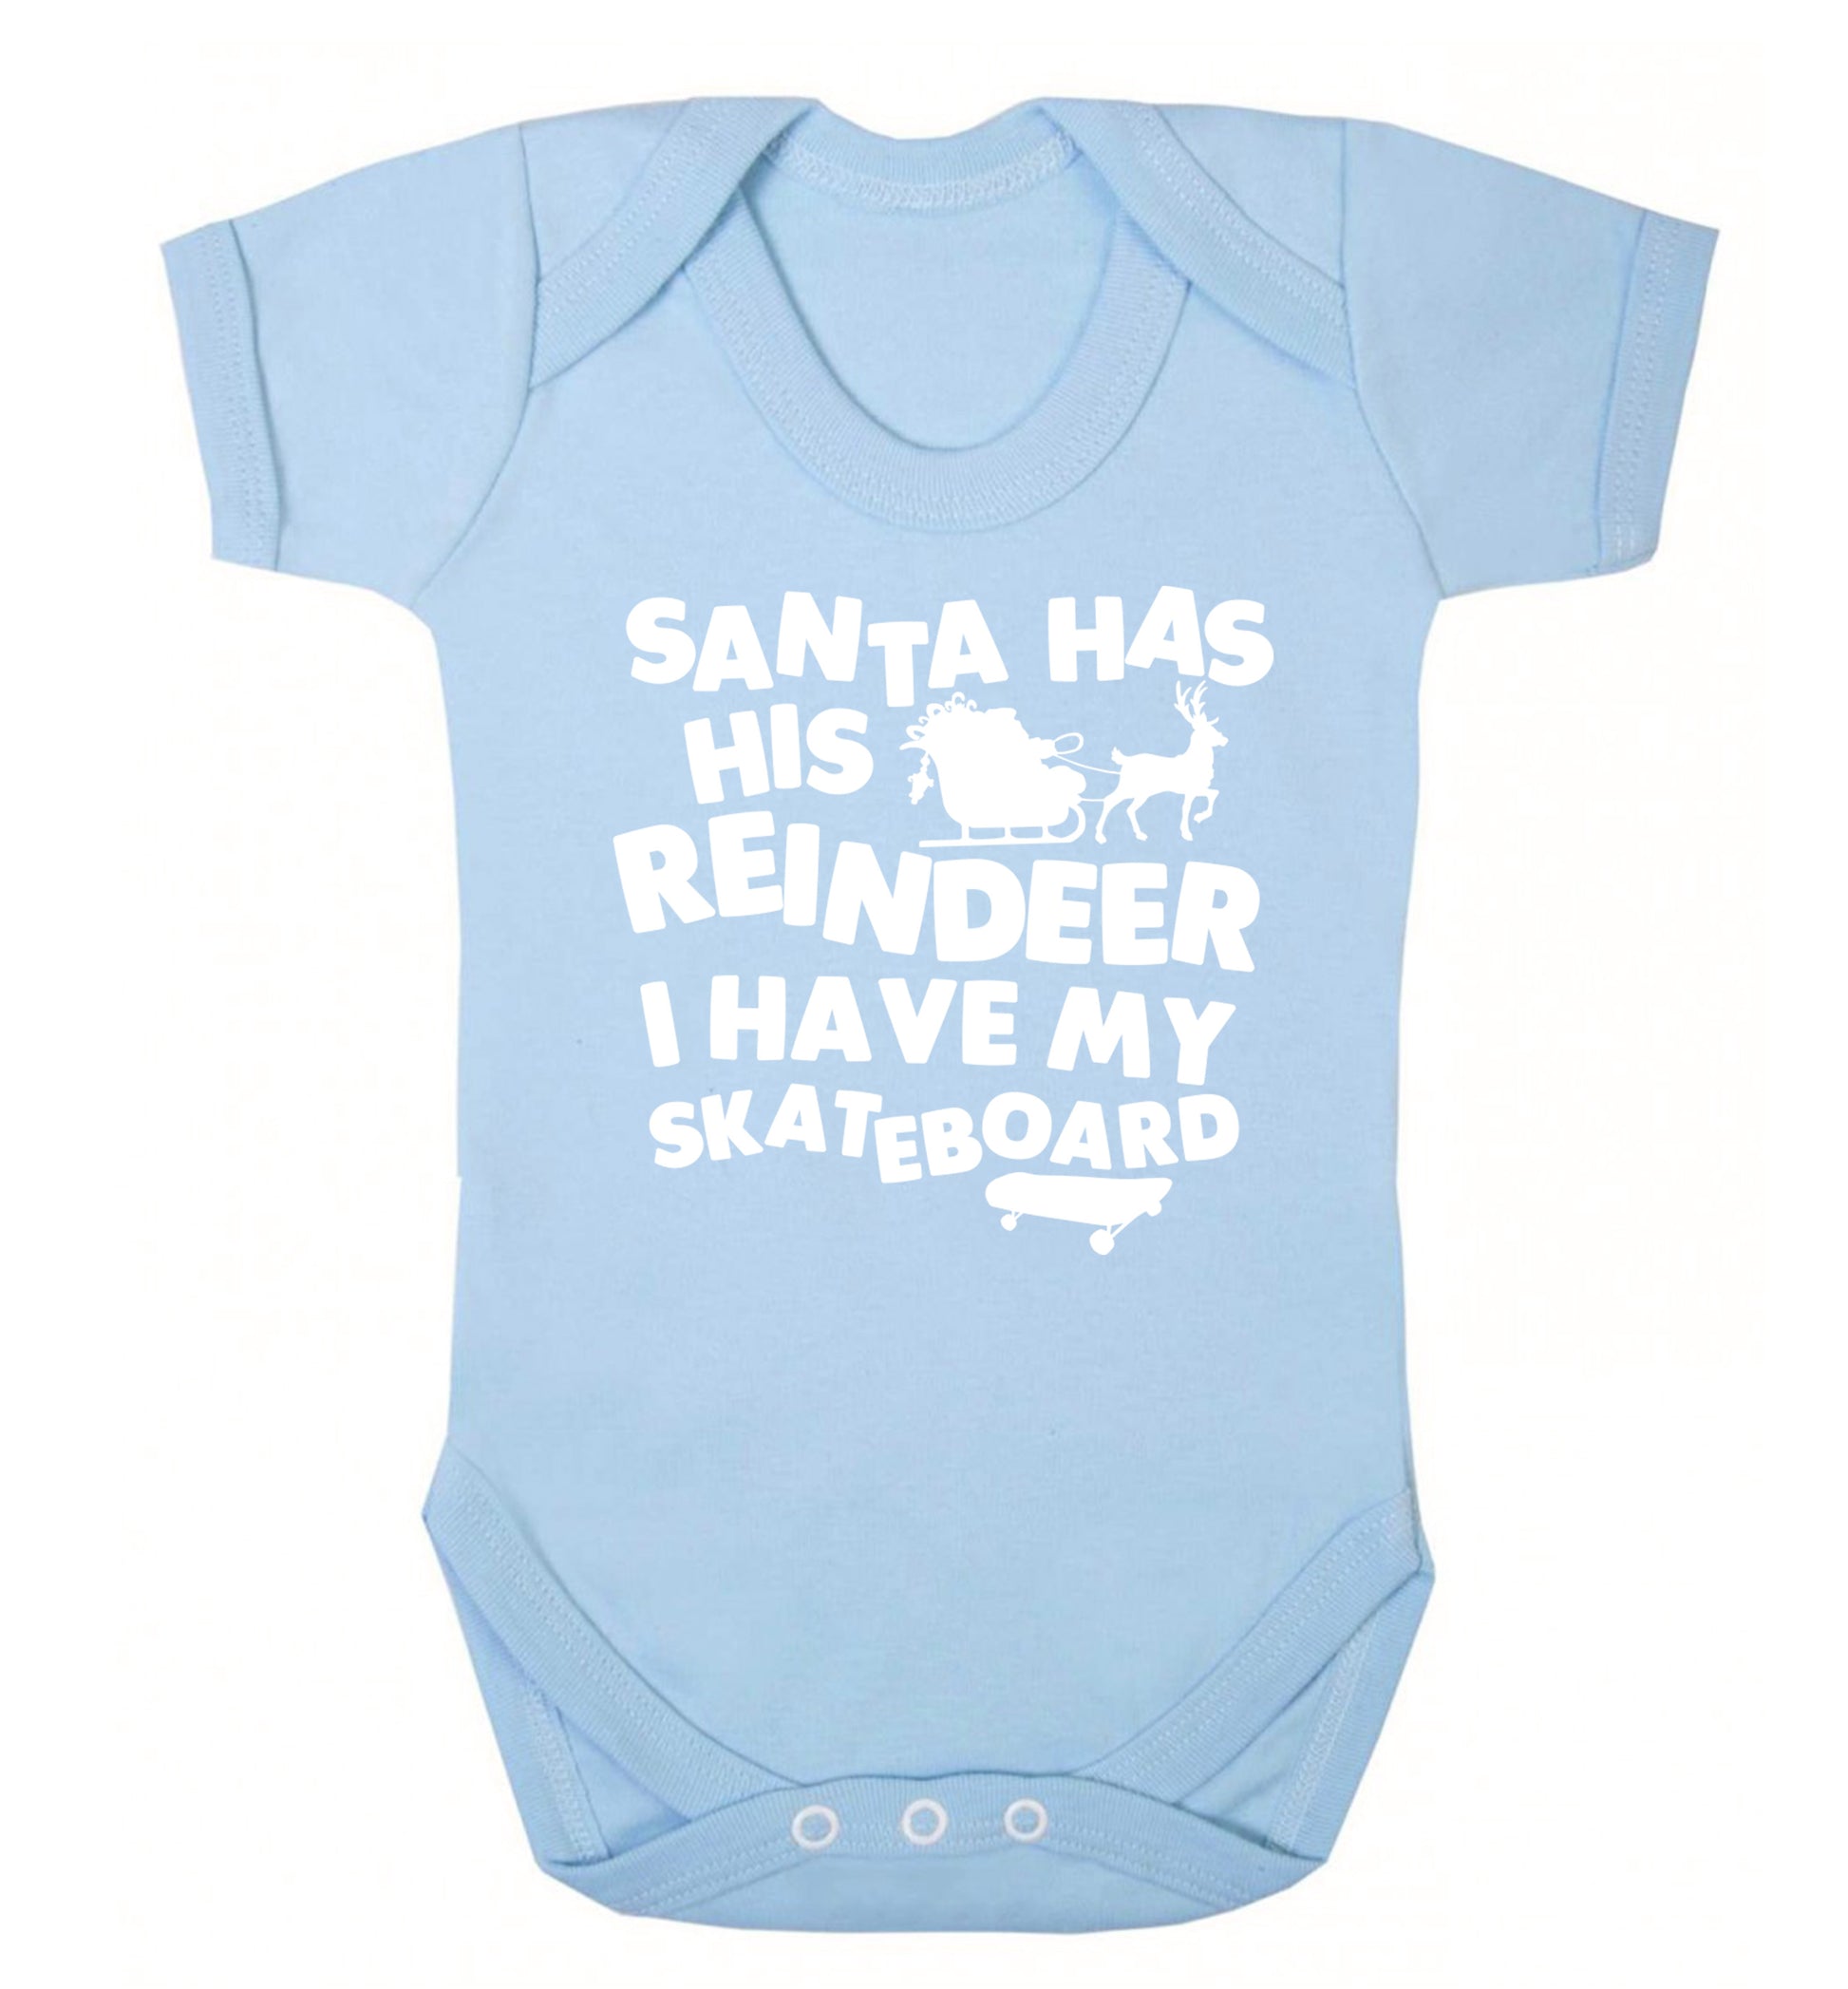 Santa has his reindeer I have my skateboard Baby Vest pale blue 18-24 months